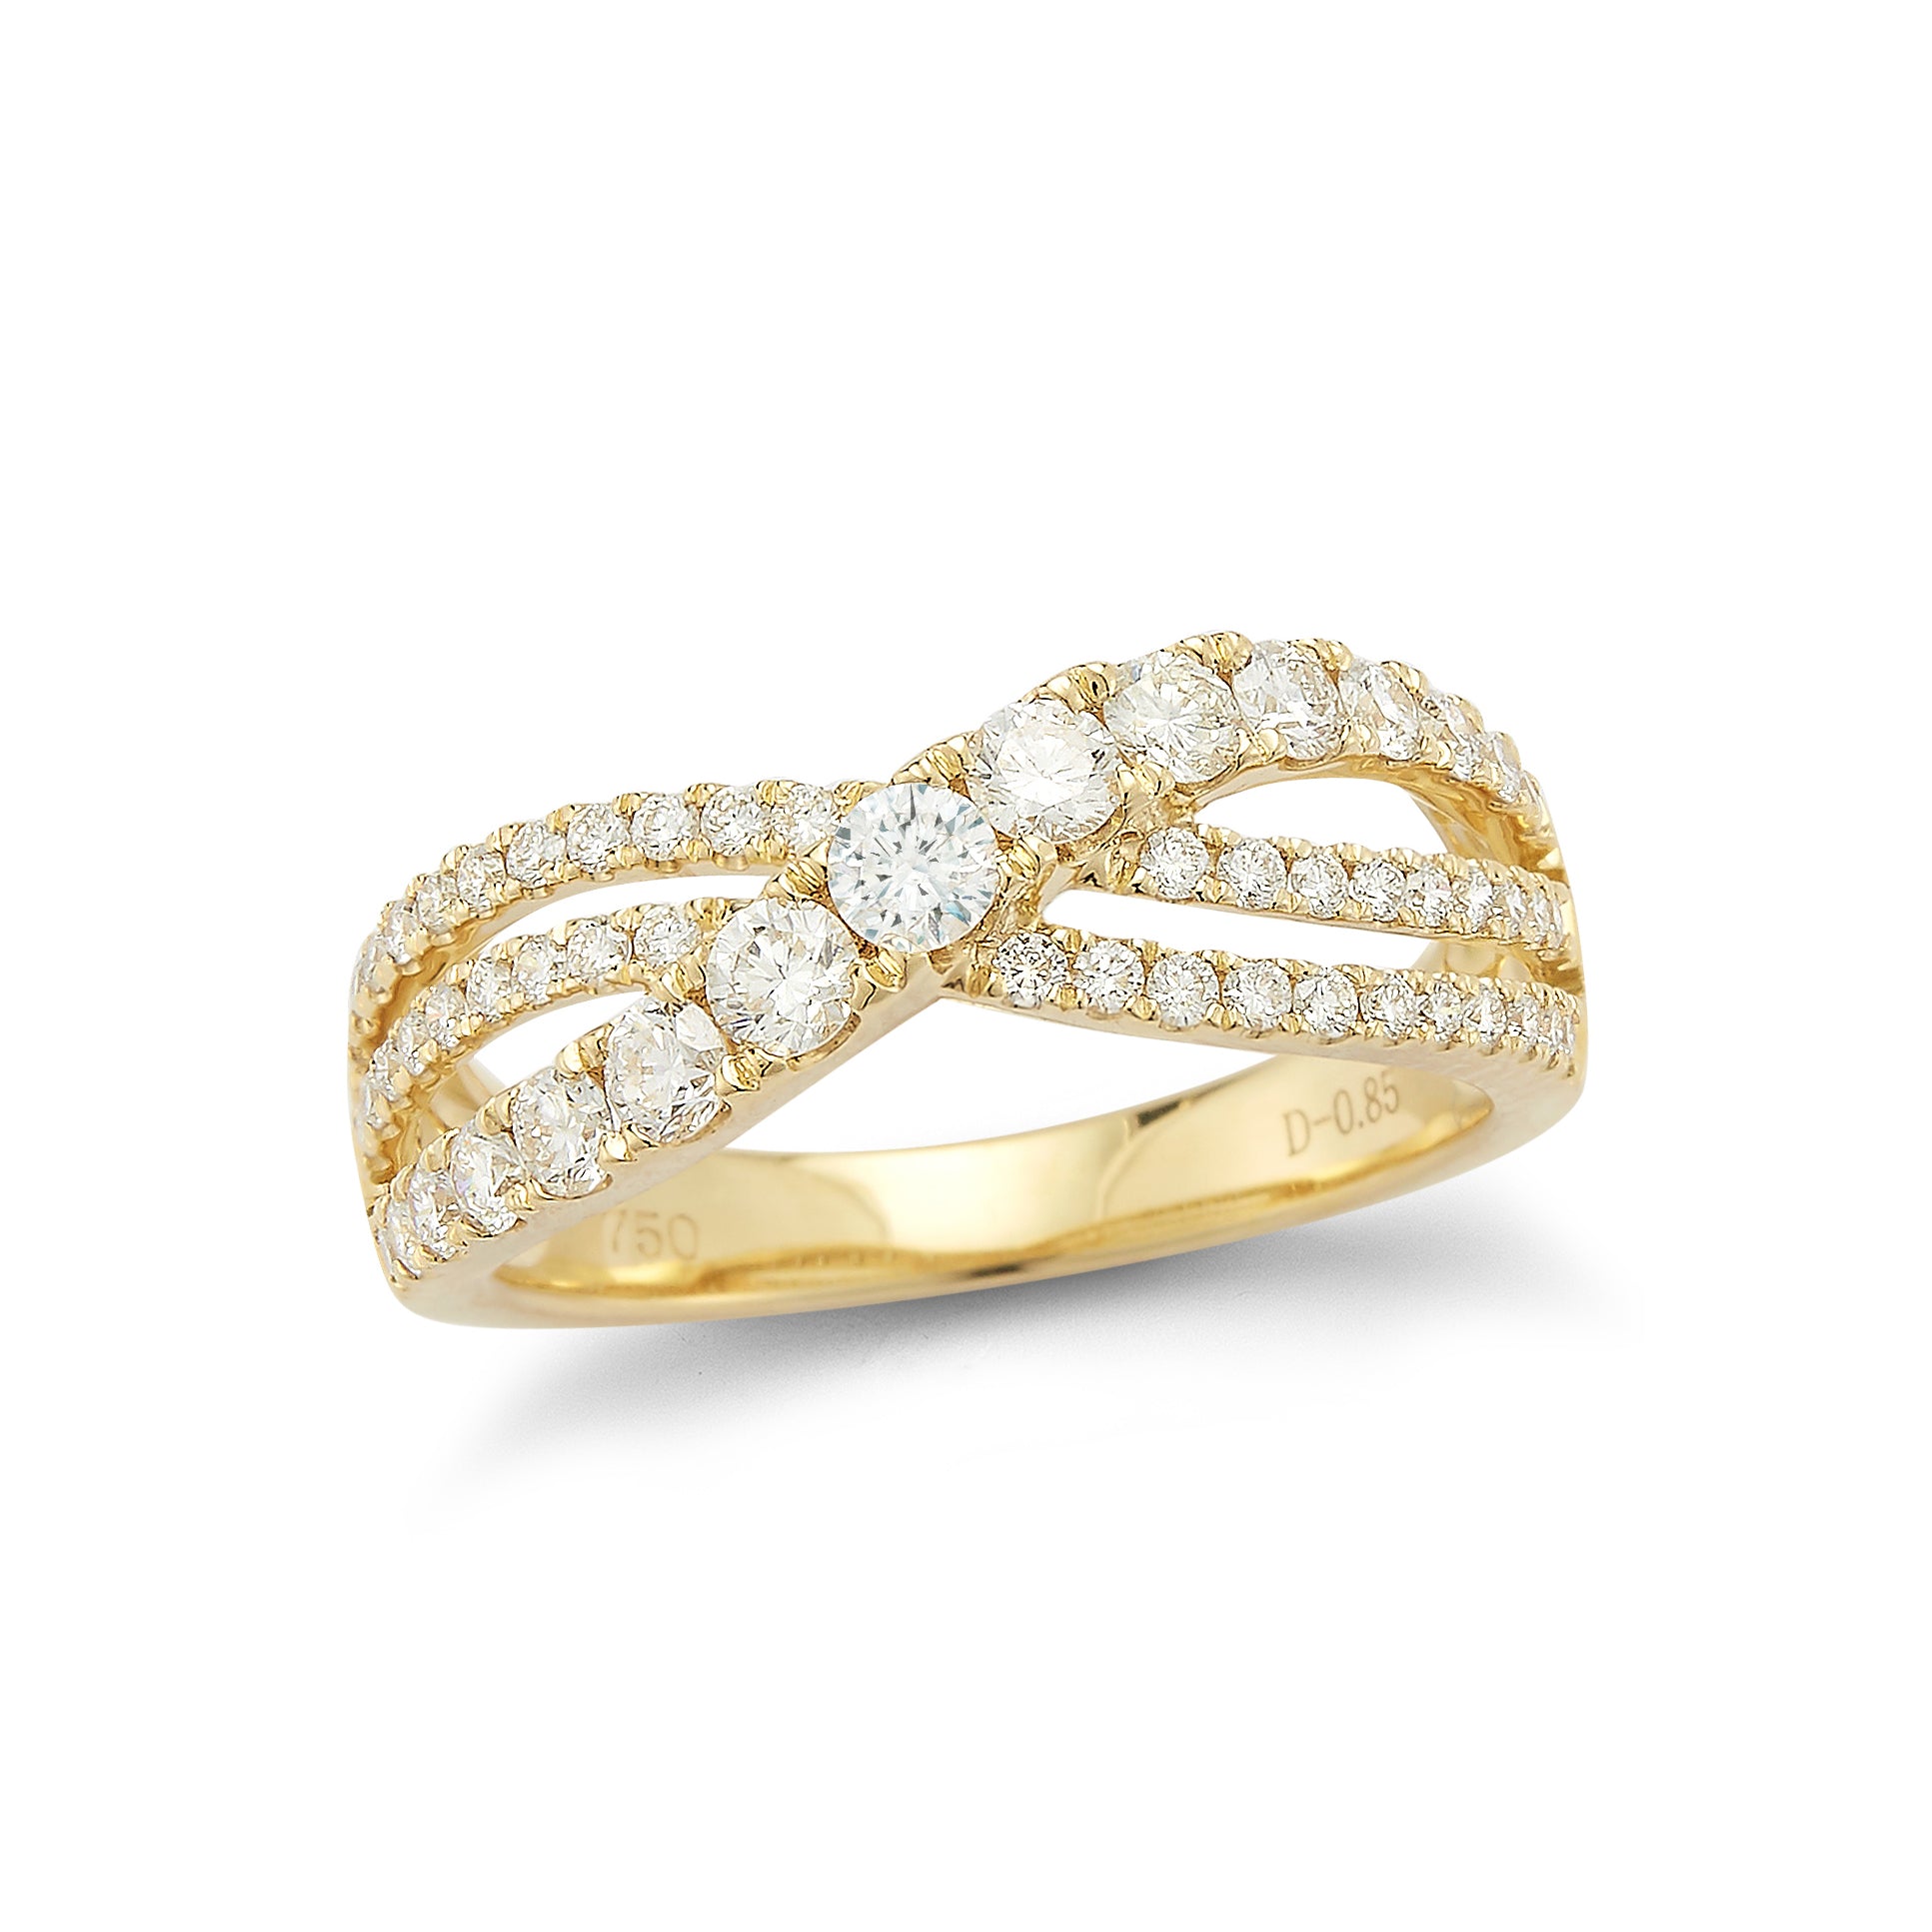 Diamond Twist Ring  18k gold, 4.21 grams, 56 round prong set diamonds .85 carats.